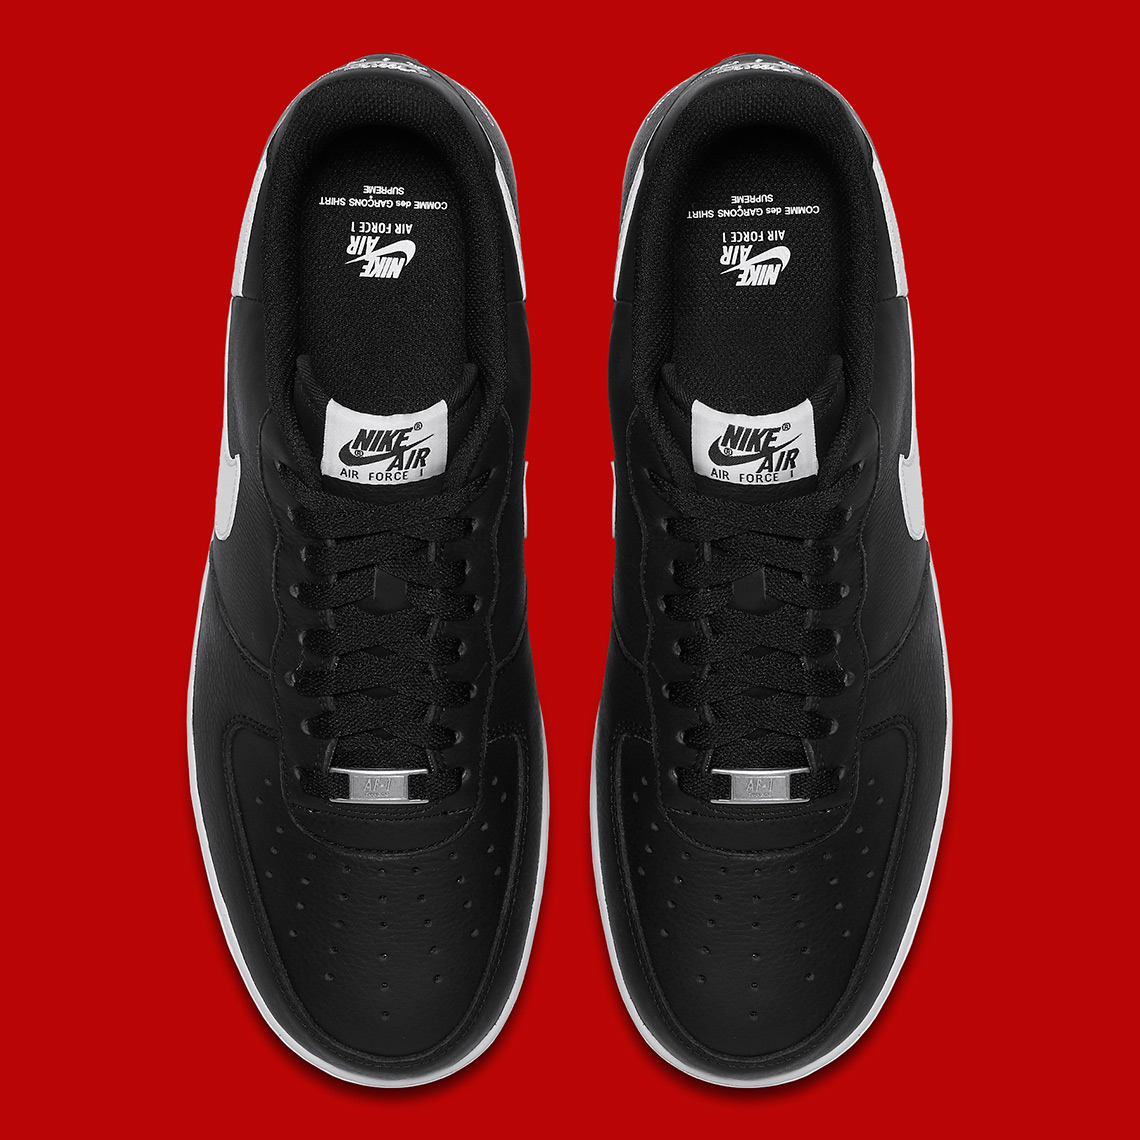 Nike Air Force 1 07 Supreme Cdg 'Supreme - Comme des Garçons ' Shoes - Size 8